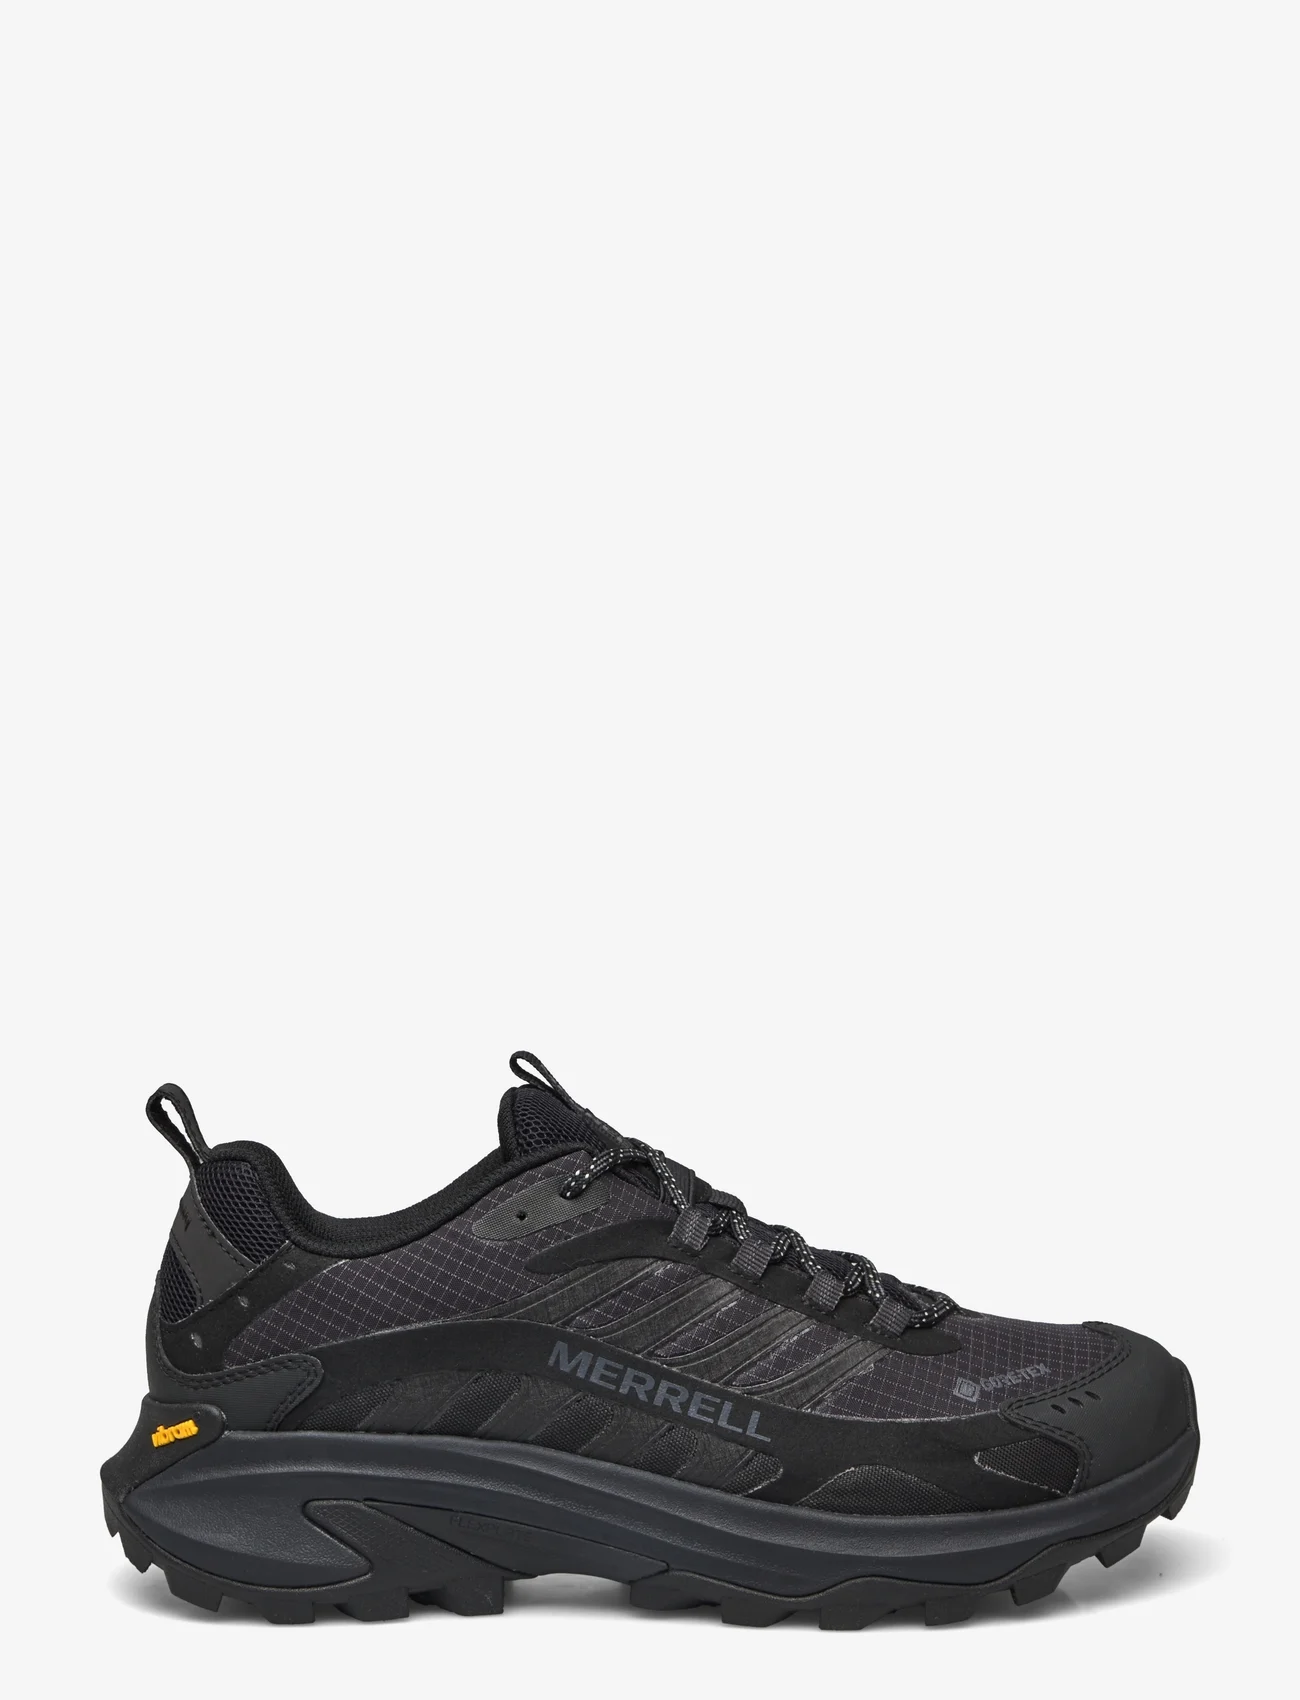 Merrell - Men's Moab Speed 2 GTX - Black - hiking shoes - black - 1